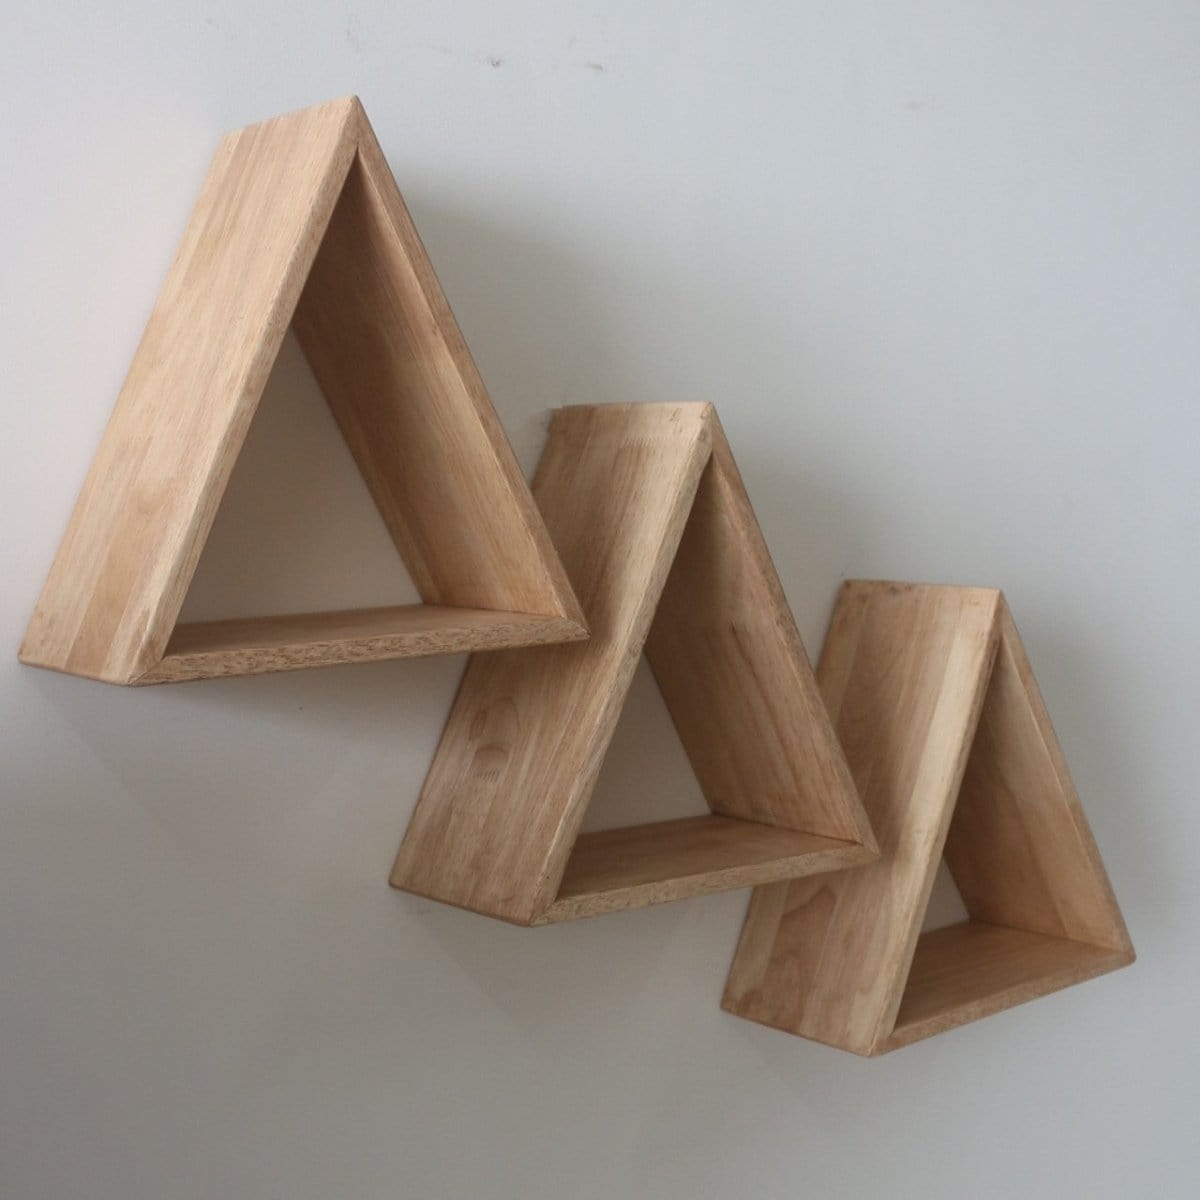 Barish Wall Shelf Triangular (Set of 3) Best Home Decor Handcrafted